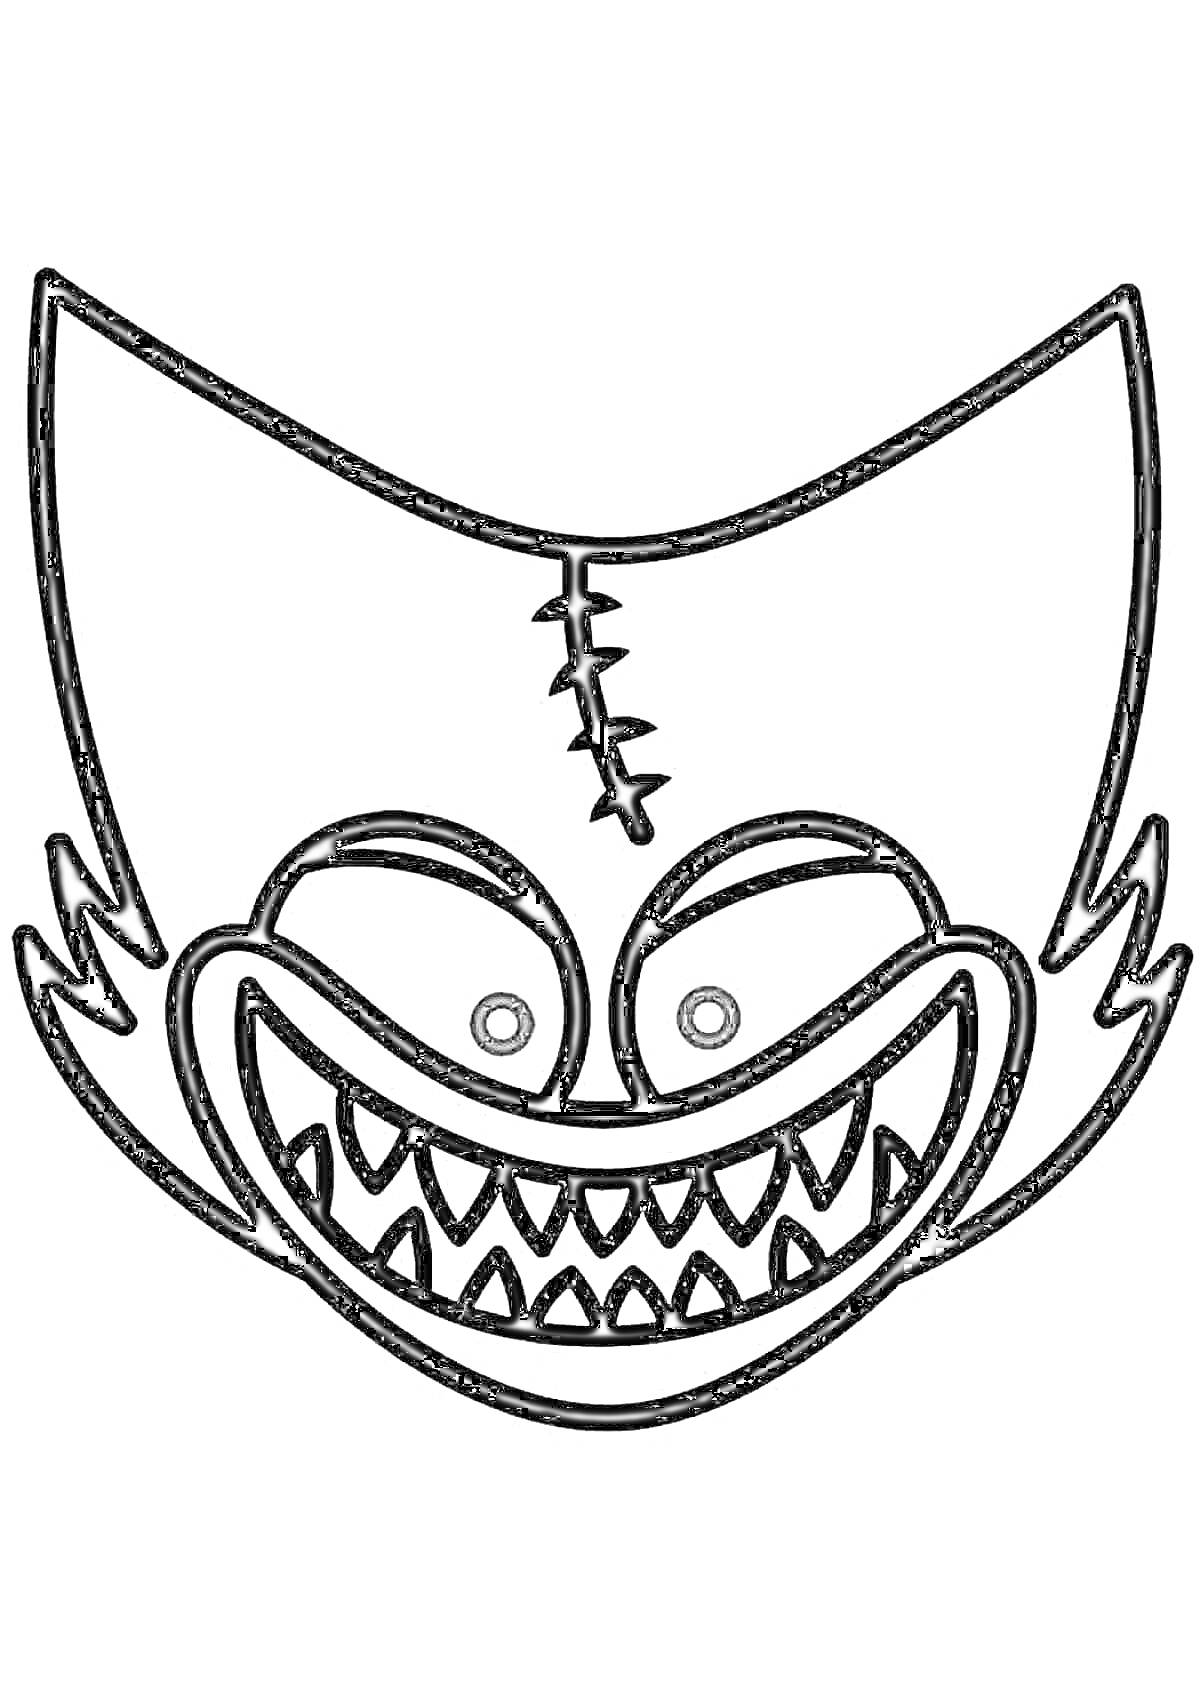 Раскраска Маска с шипами и зубами, изображение противогаза из Poppy Playtime